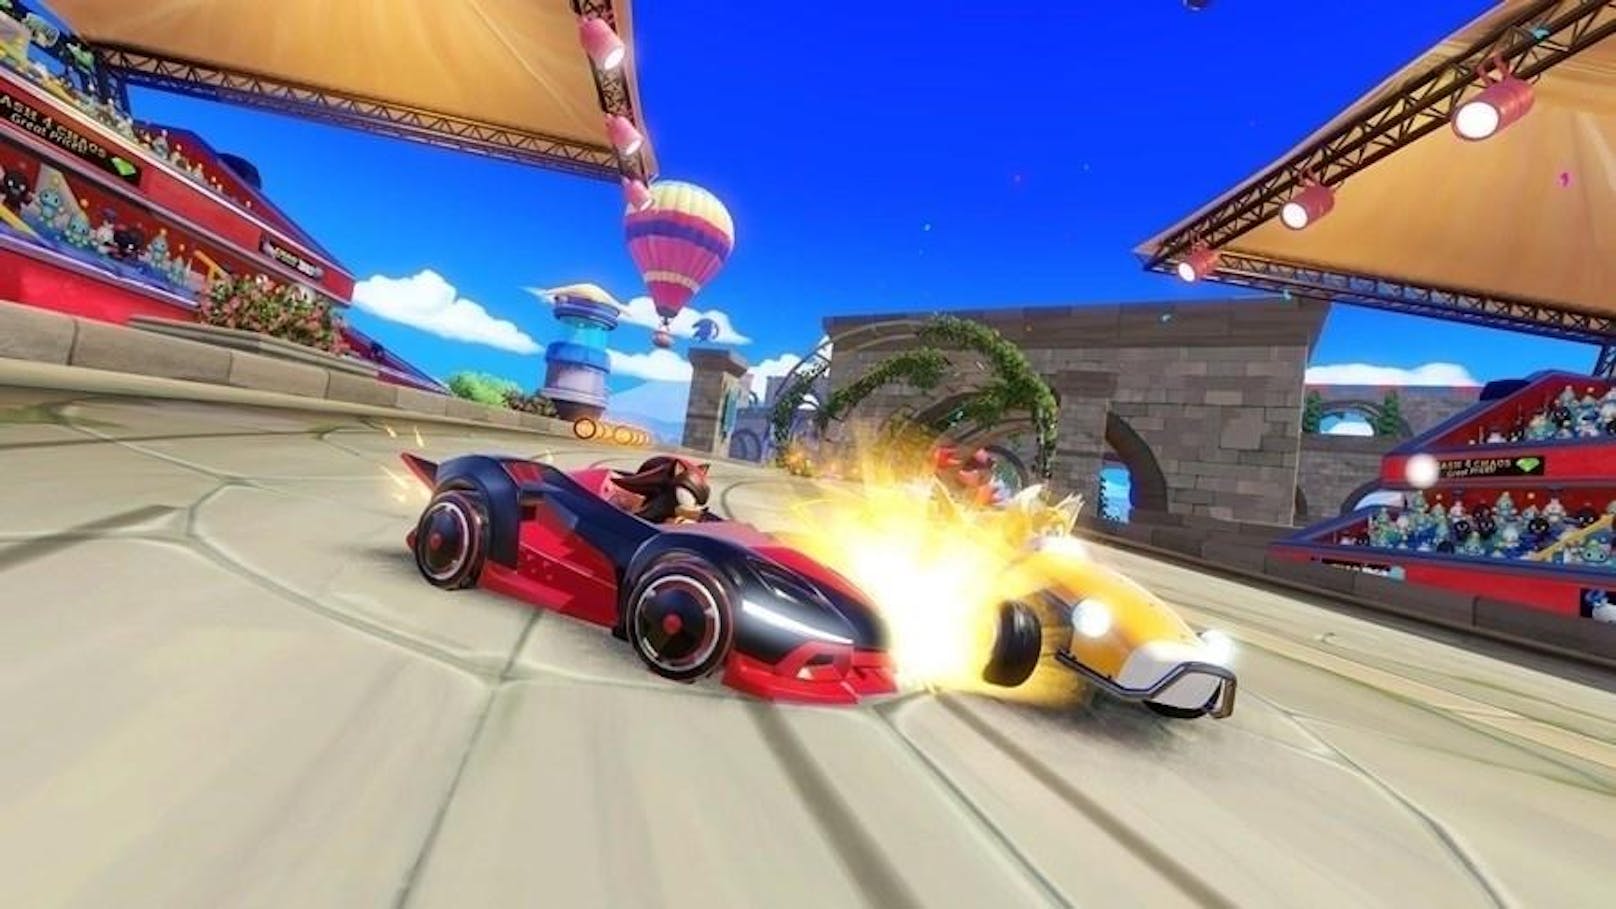  <a href="https://www.heute.at/digital/games/story/Team-Sonic-Racing-Test-Review-Mach-Platz-Mario-51830074" target="_blank">Team Sonic Racing</a>